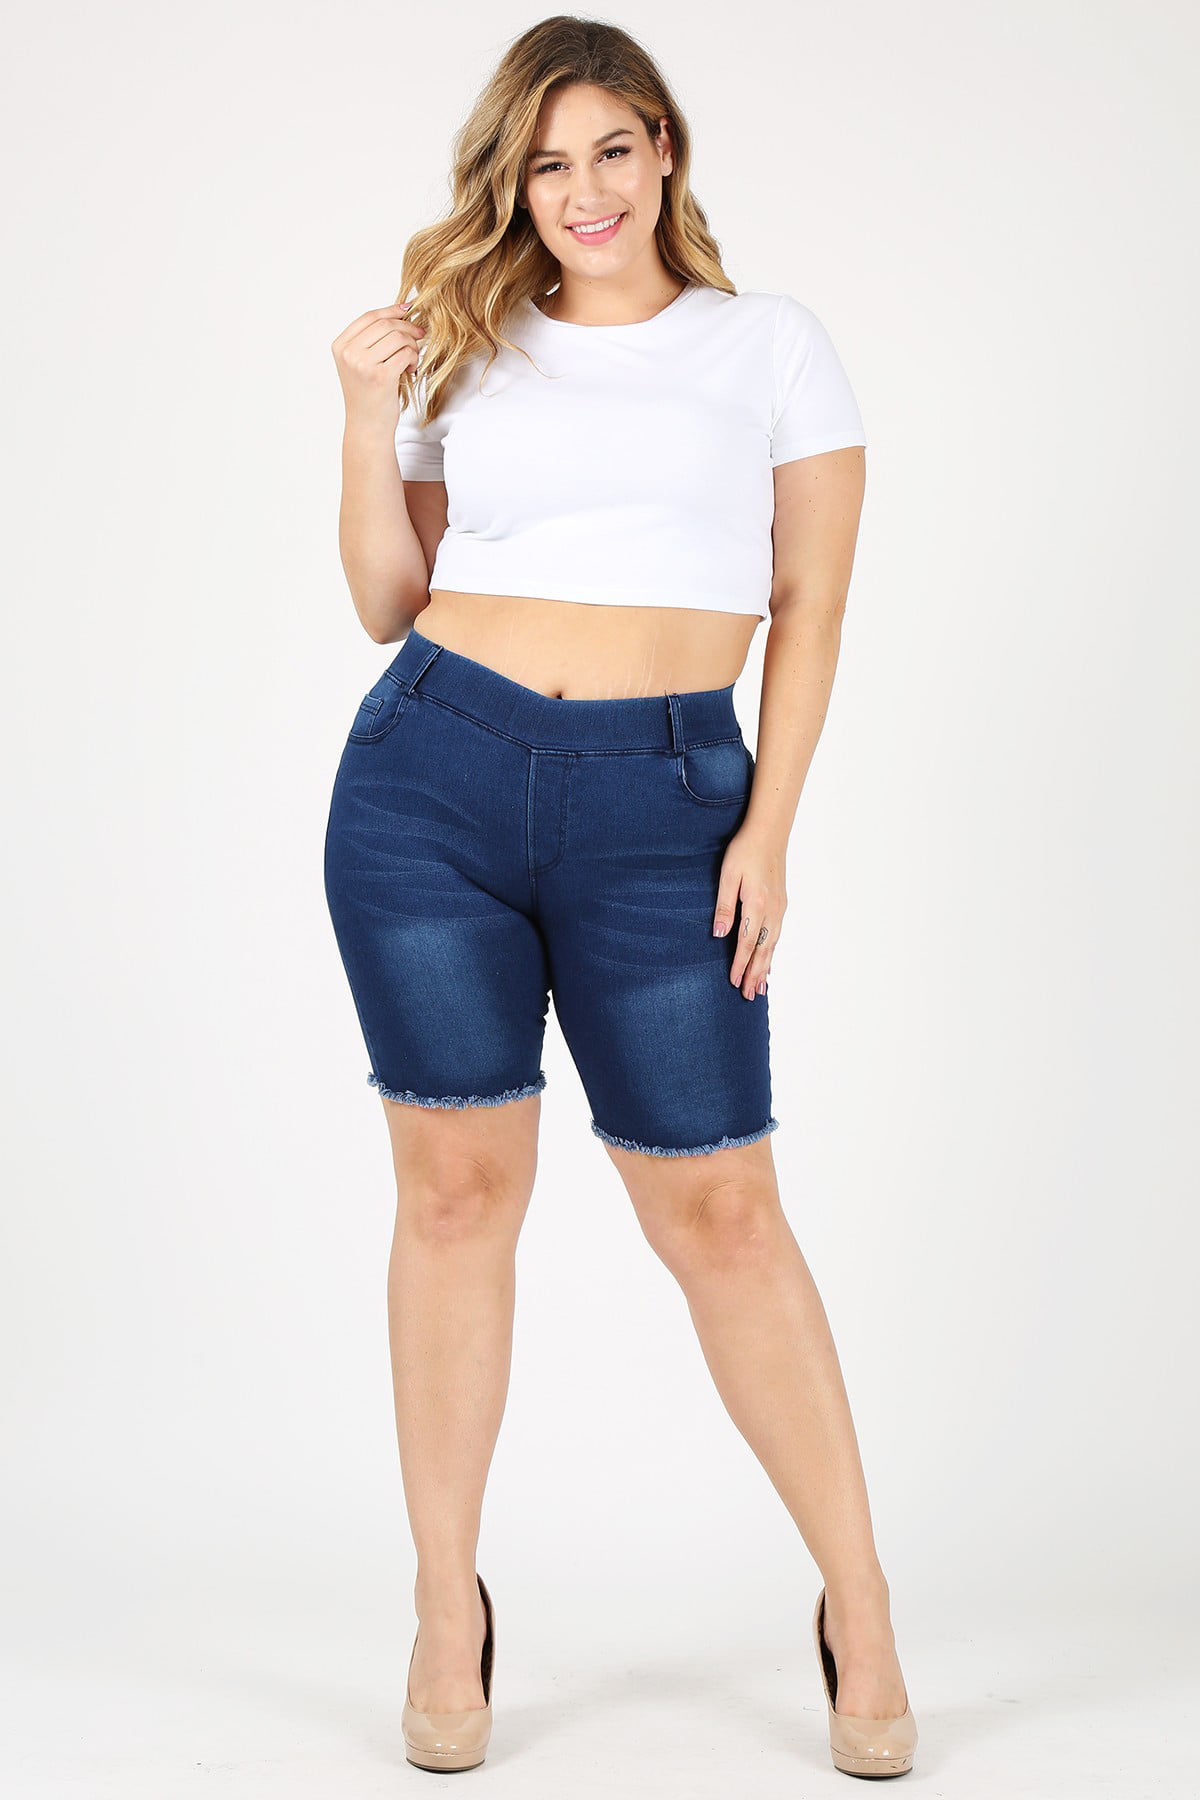 Love Sweet - Plus size women pull-on 5 pockets classic jeans Bermudas ...